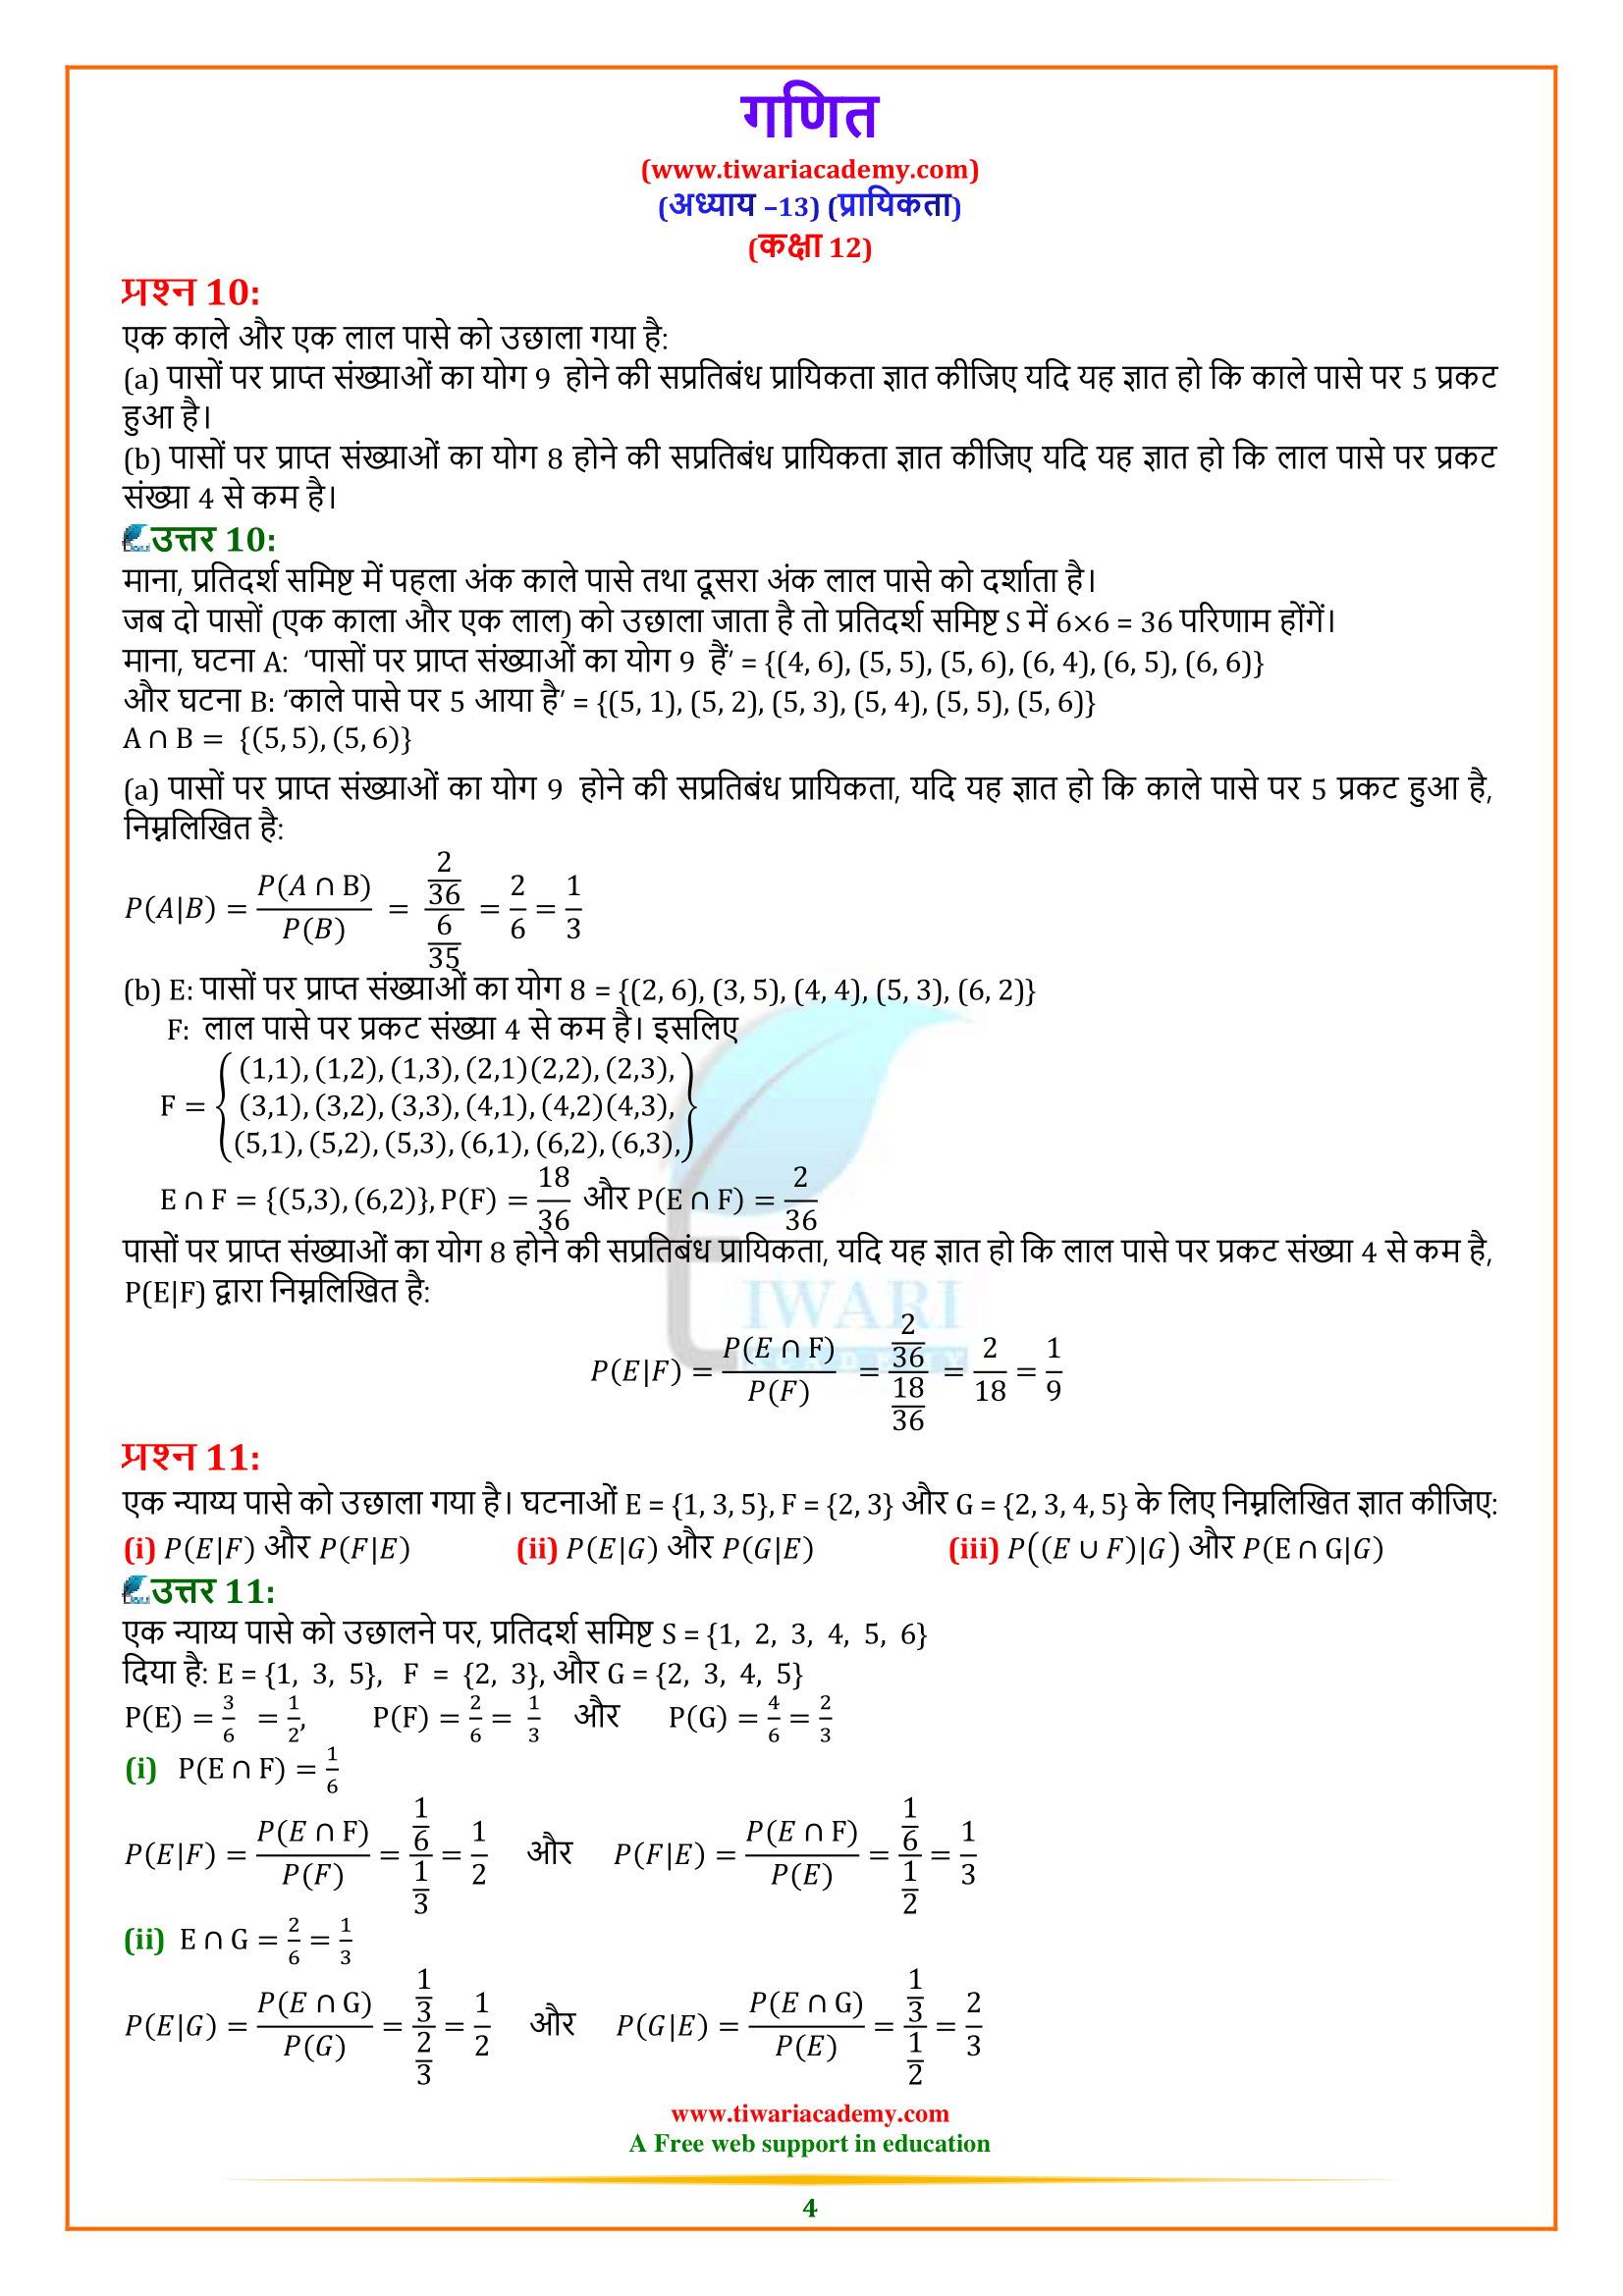 CBSE Class 12 Maths Chapter 13 Exercise 13.1 in Hindi Medium